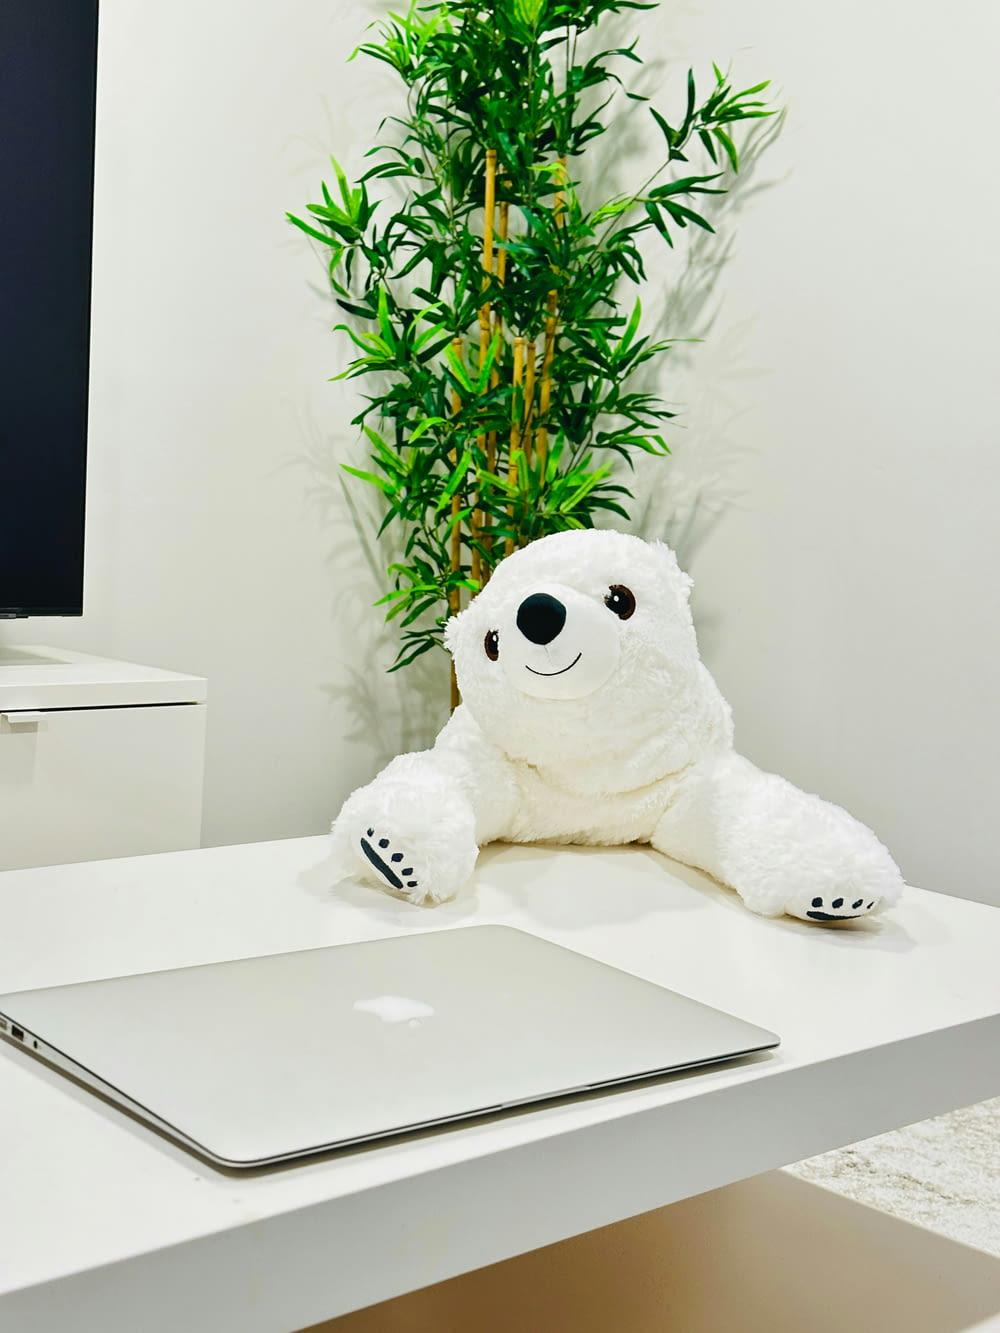 a white teddy bear sitting on a desk next to a laptop